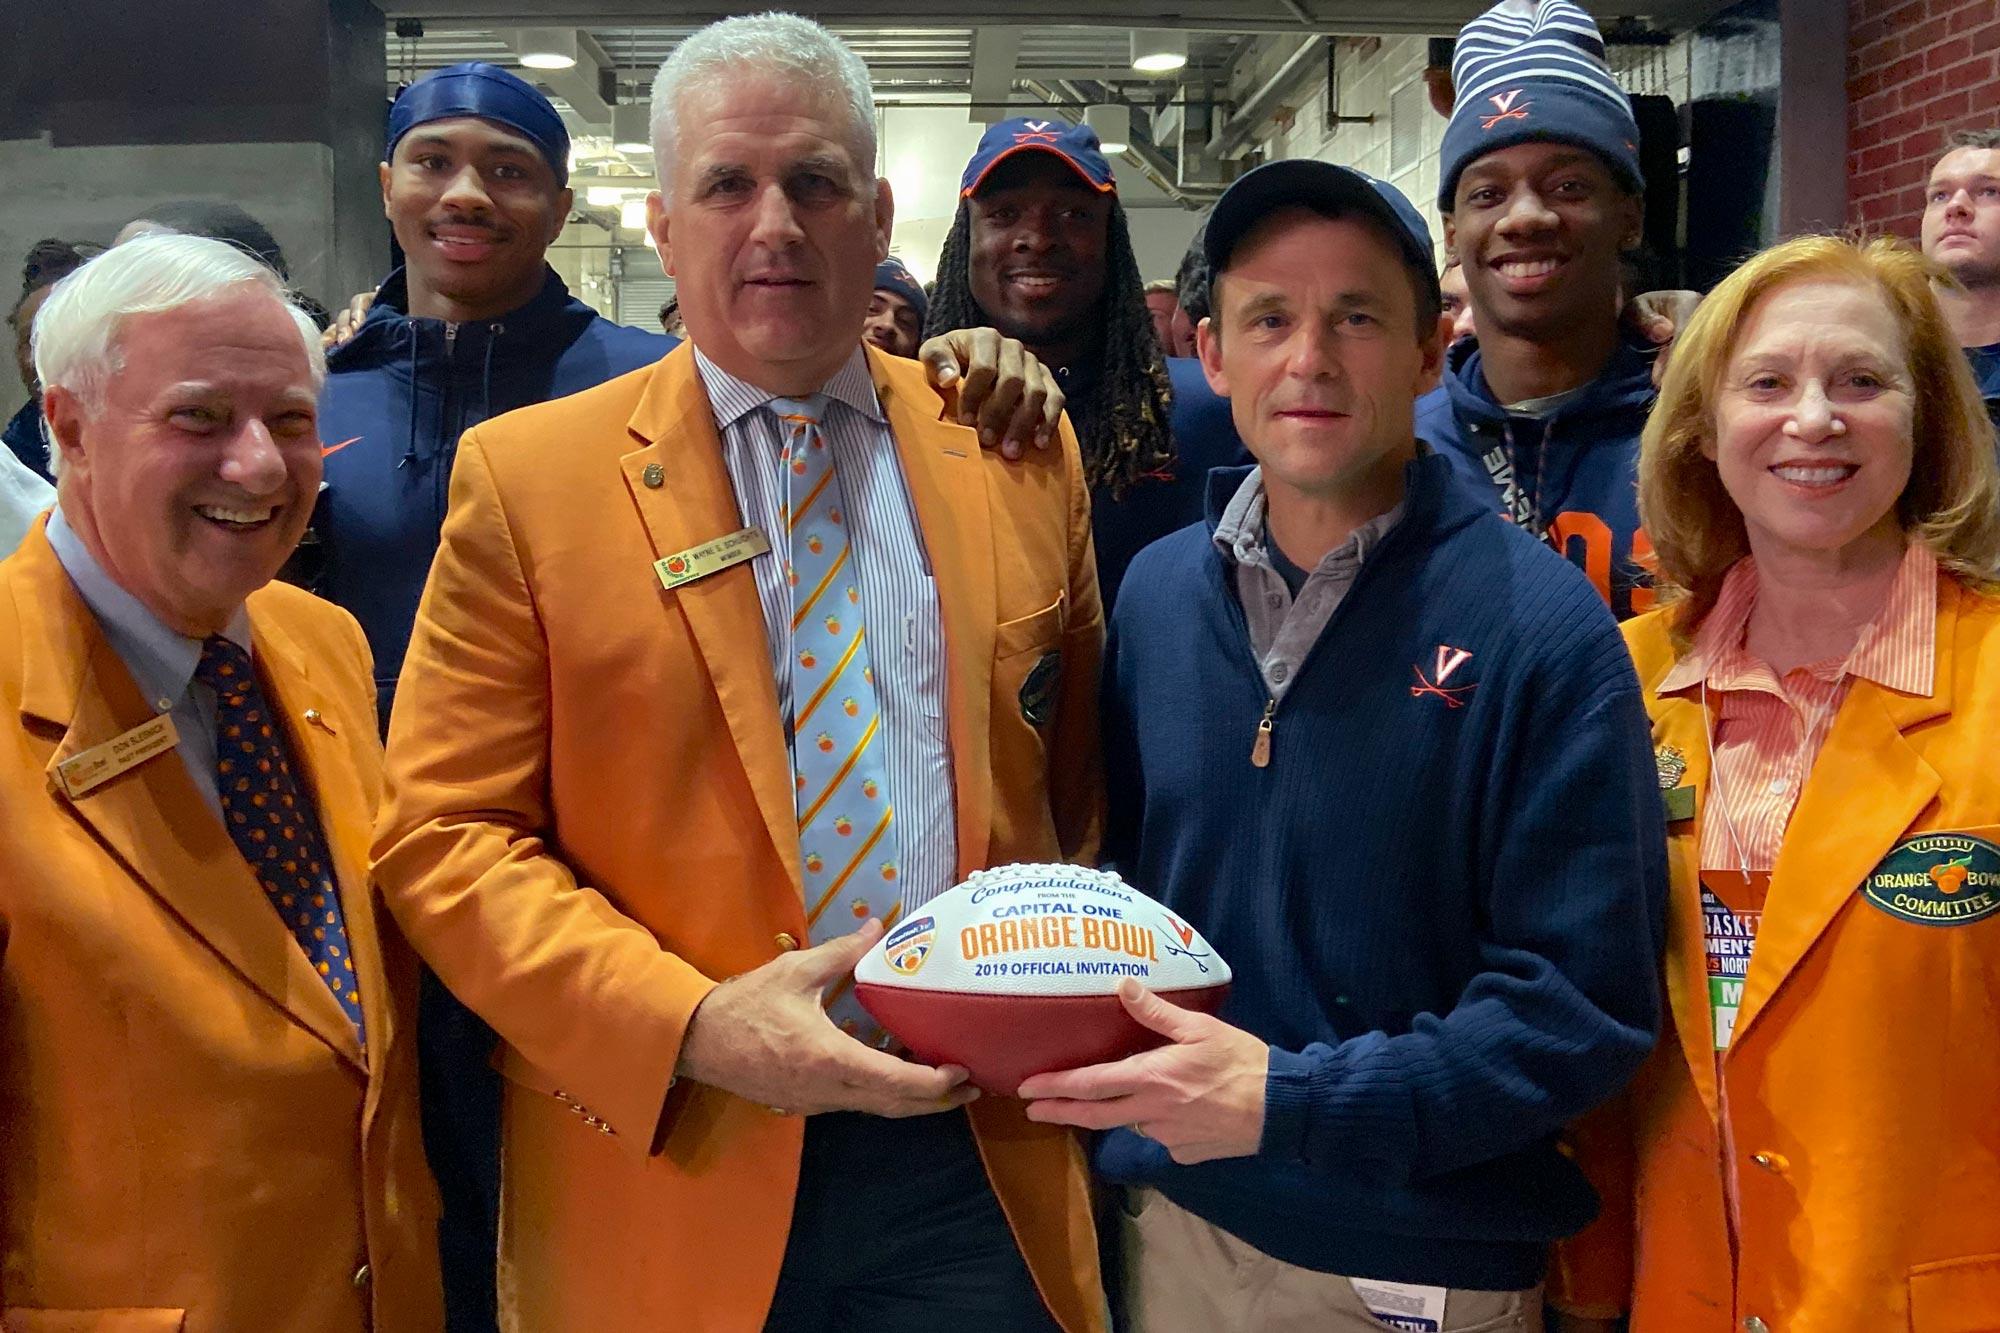 Wayne Schuchts, center, with UVA President Jim Ryan, other members of the Orange Bowl delegation holding an Orange bowl football